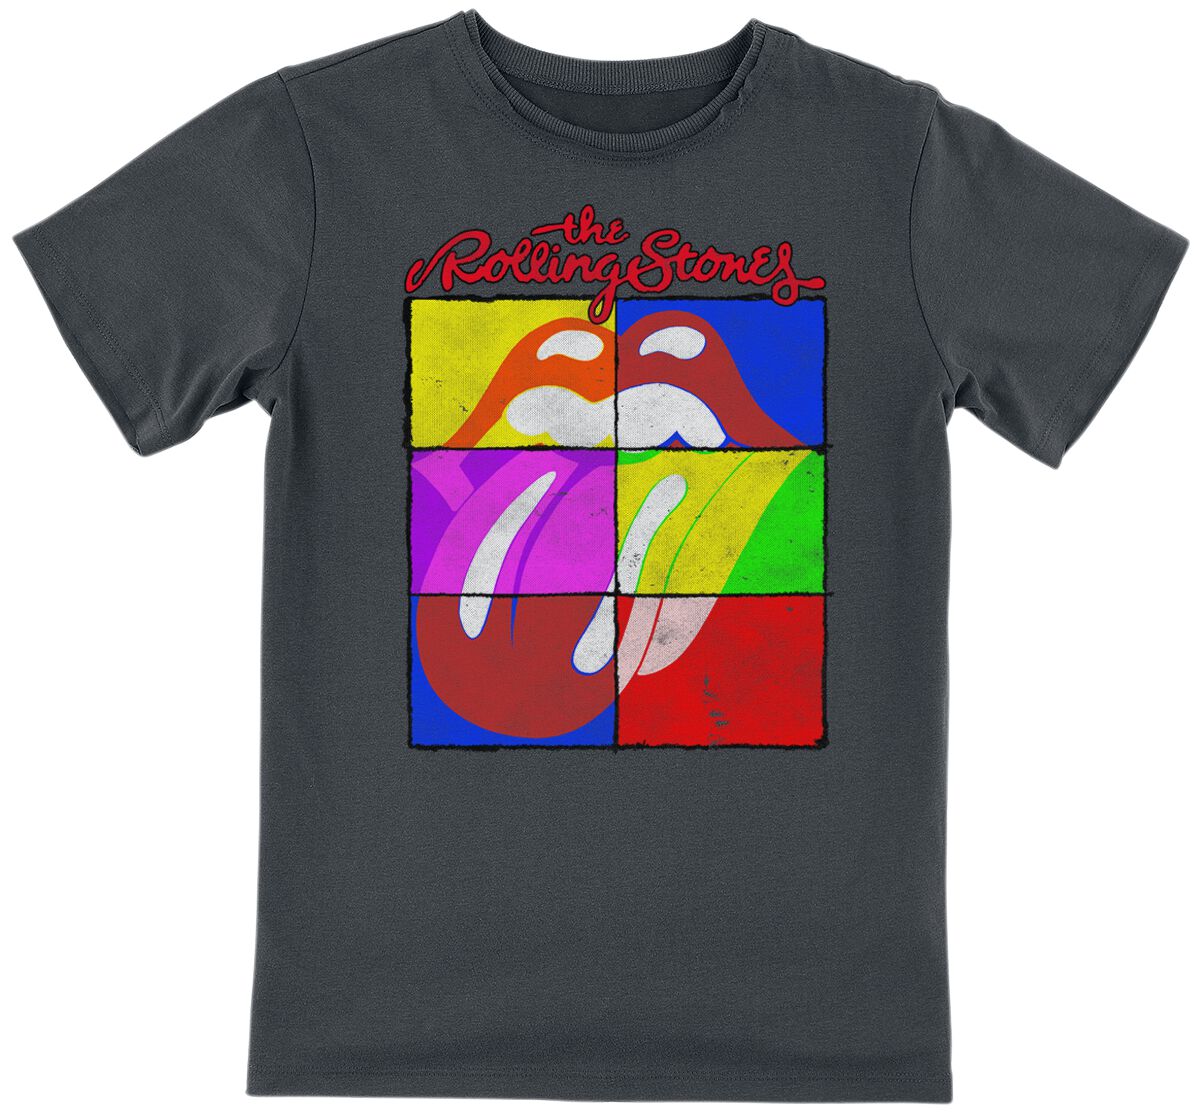 The Rolling Stones T-Shirt für Kinder - Amplified Collection - Kids - Square Tongue - für Mädchen & Jungen - charcoal  - Lizenziertes Merchandise!